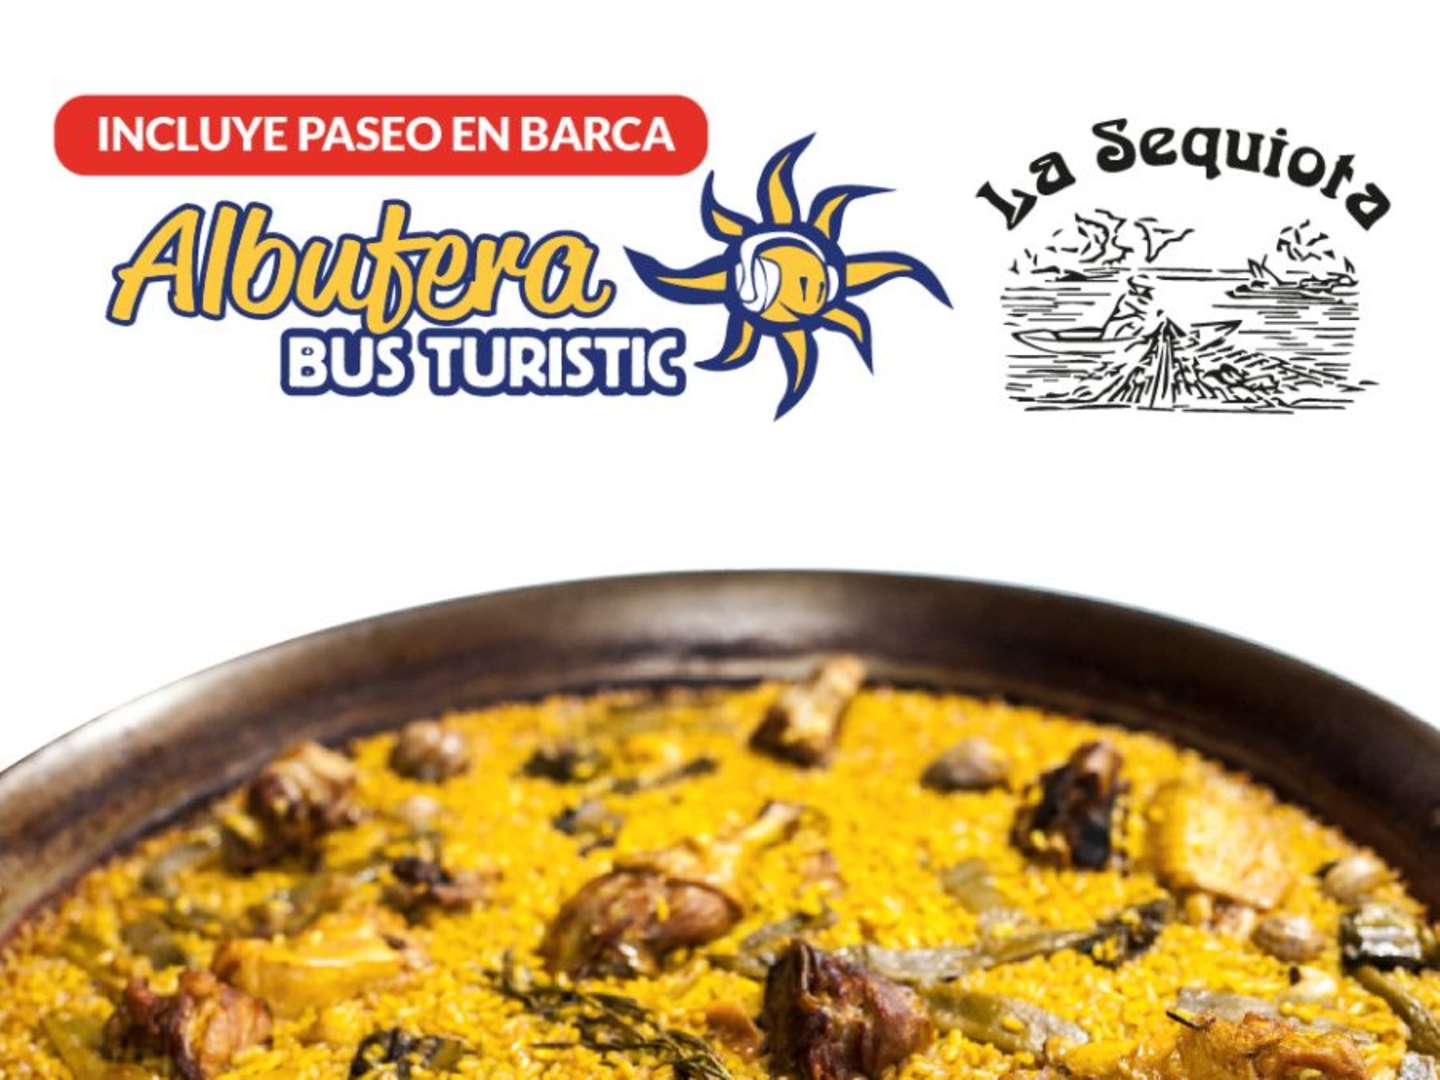 ALBUFERA BUS TURISTIC + MENÚ - Billete Albufera + menú - desde 35.00 €  